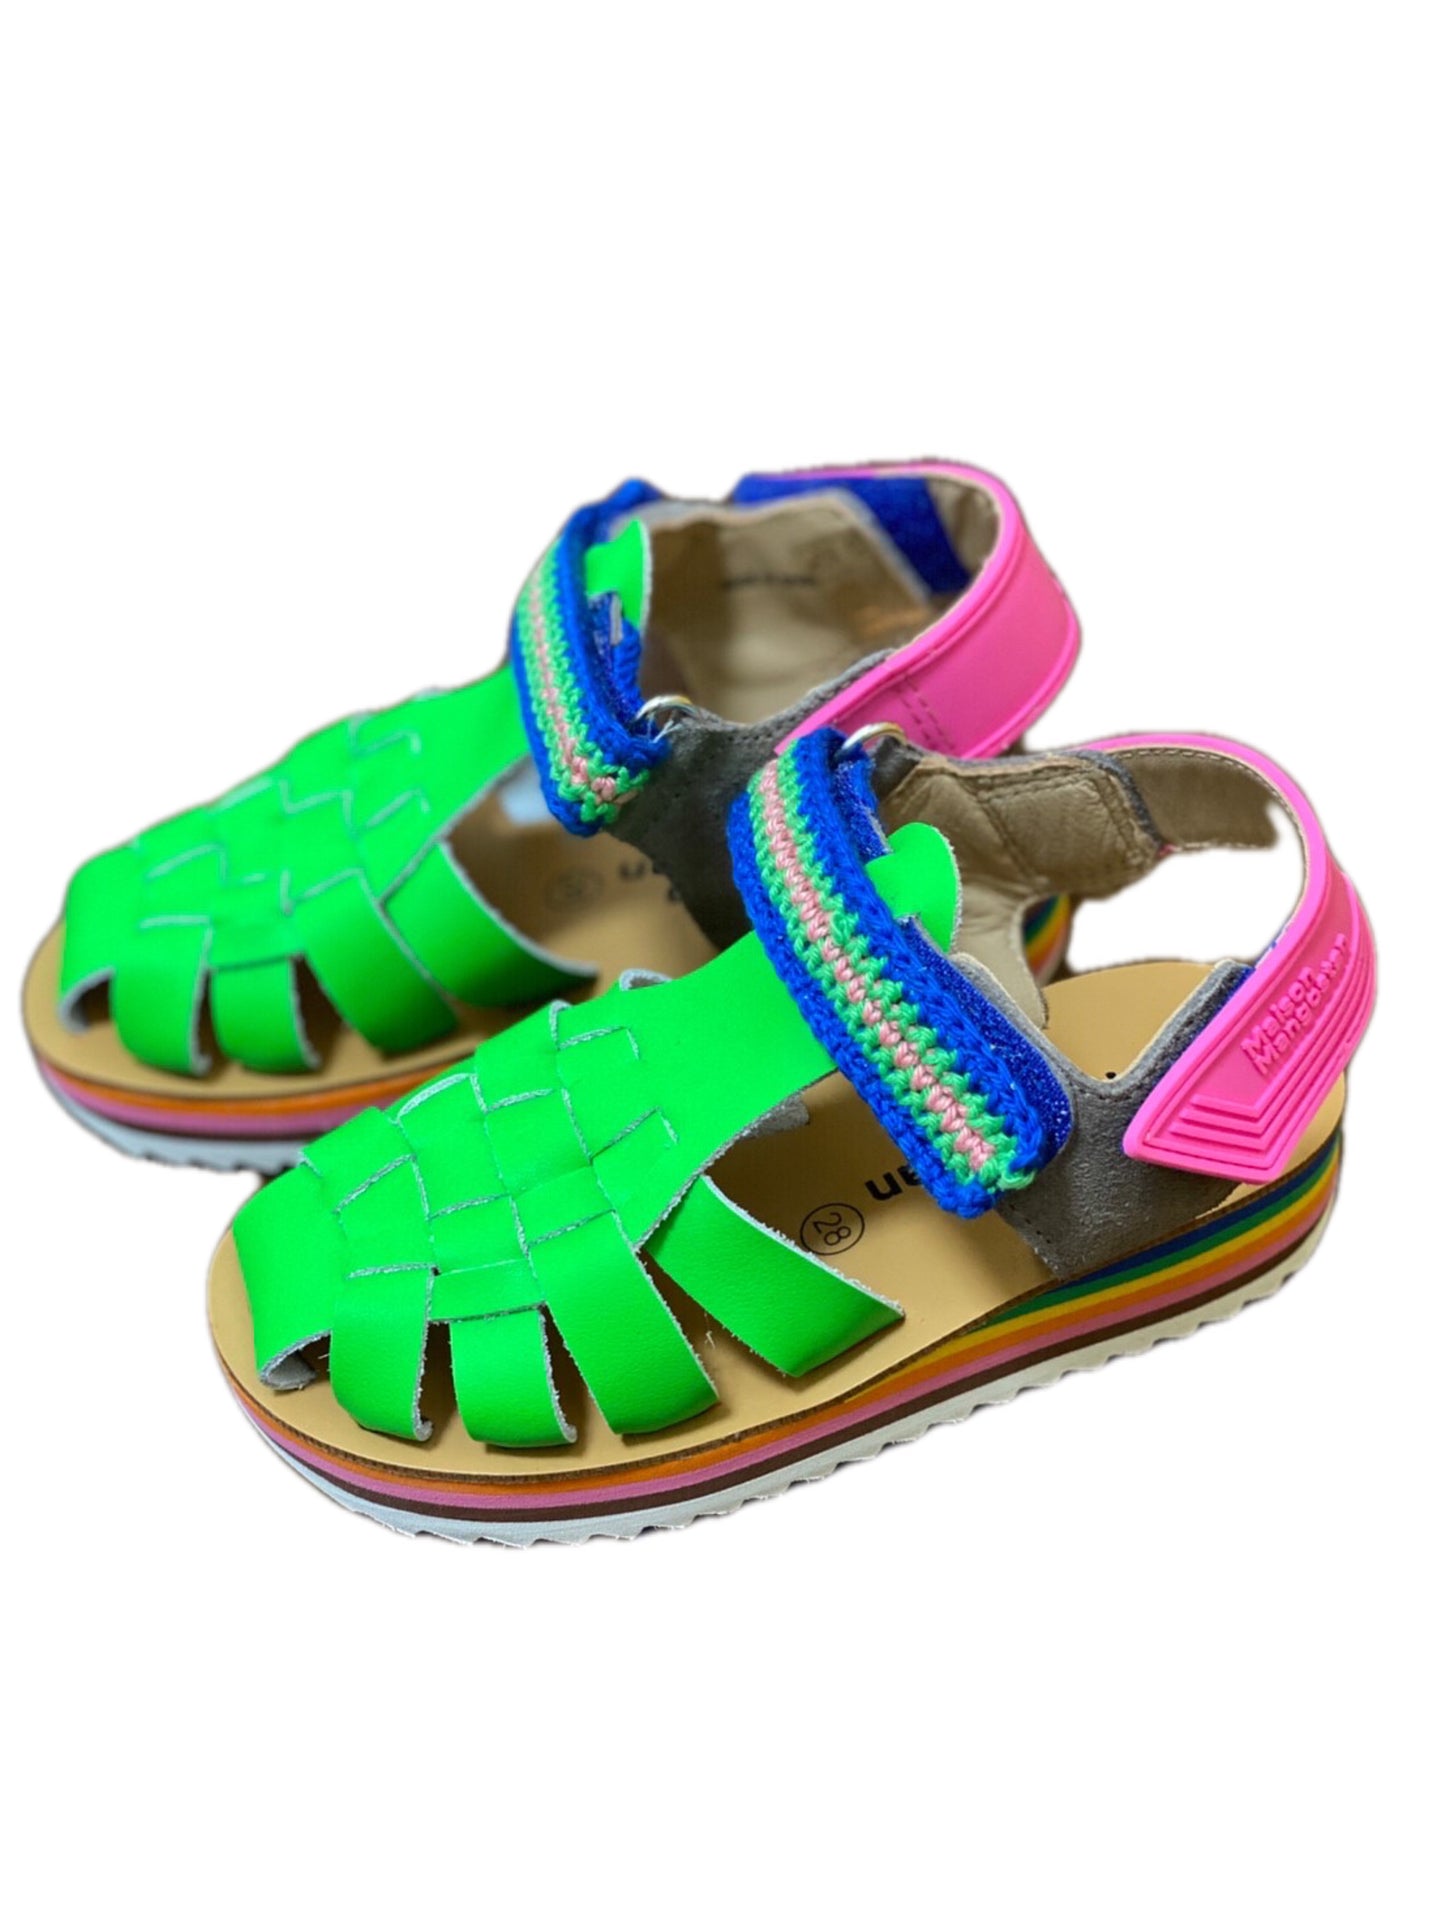 Maracuja Green Sandals 32(19cm)